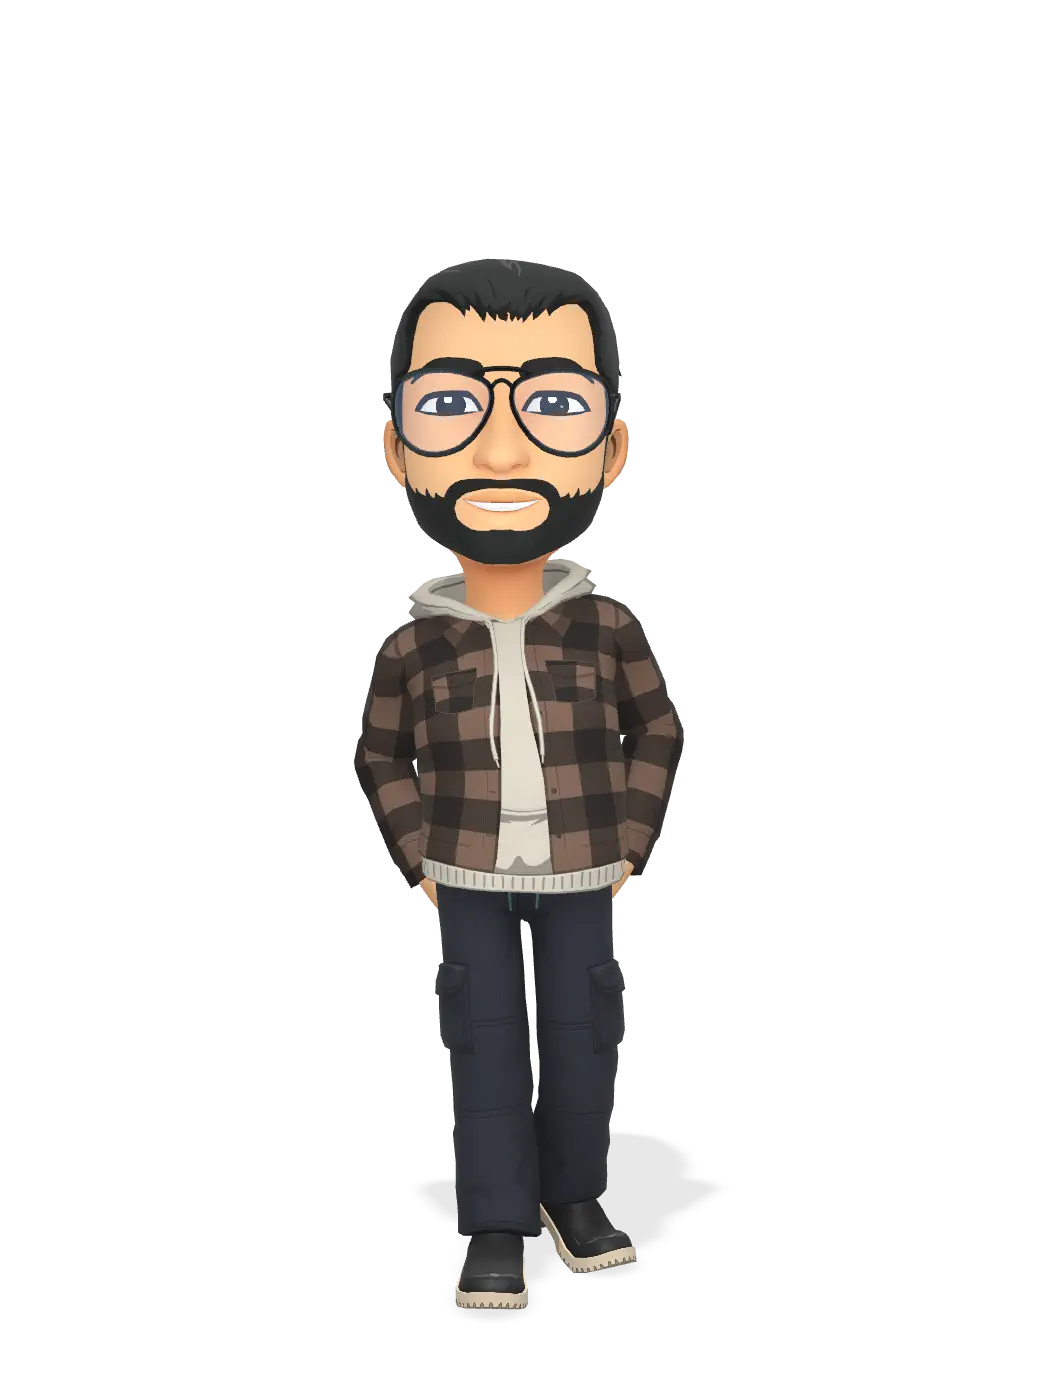 3D Bitmoji for roohee-12 avatar